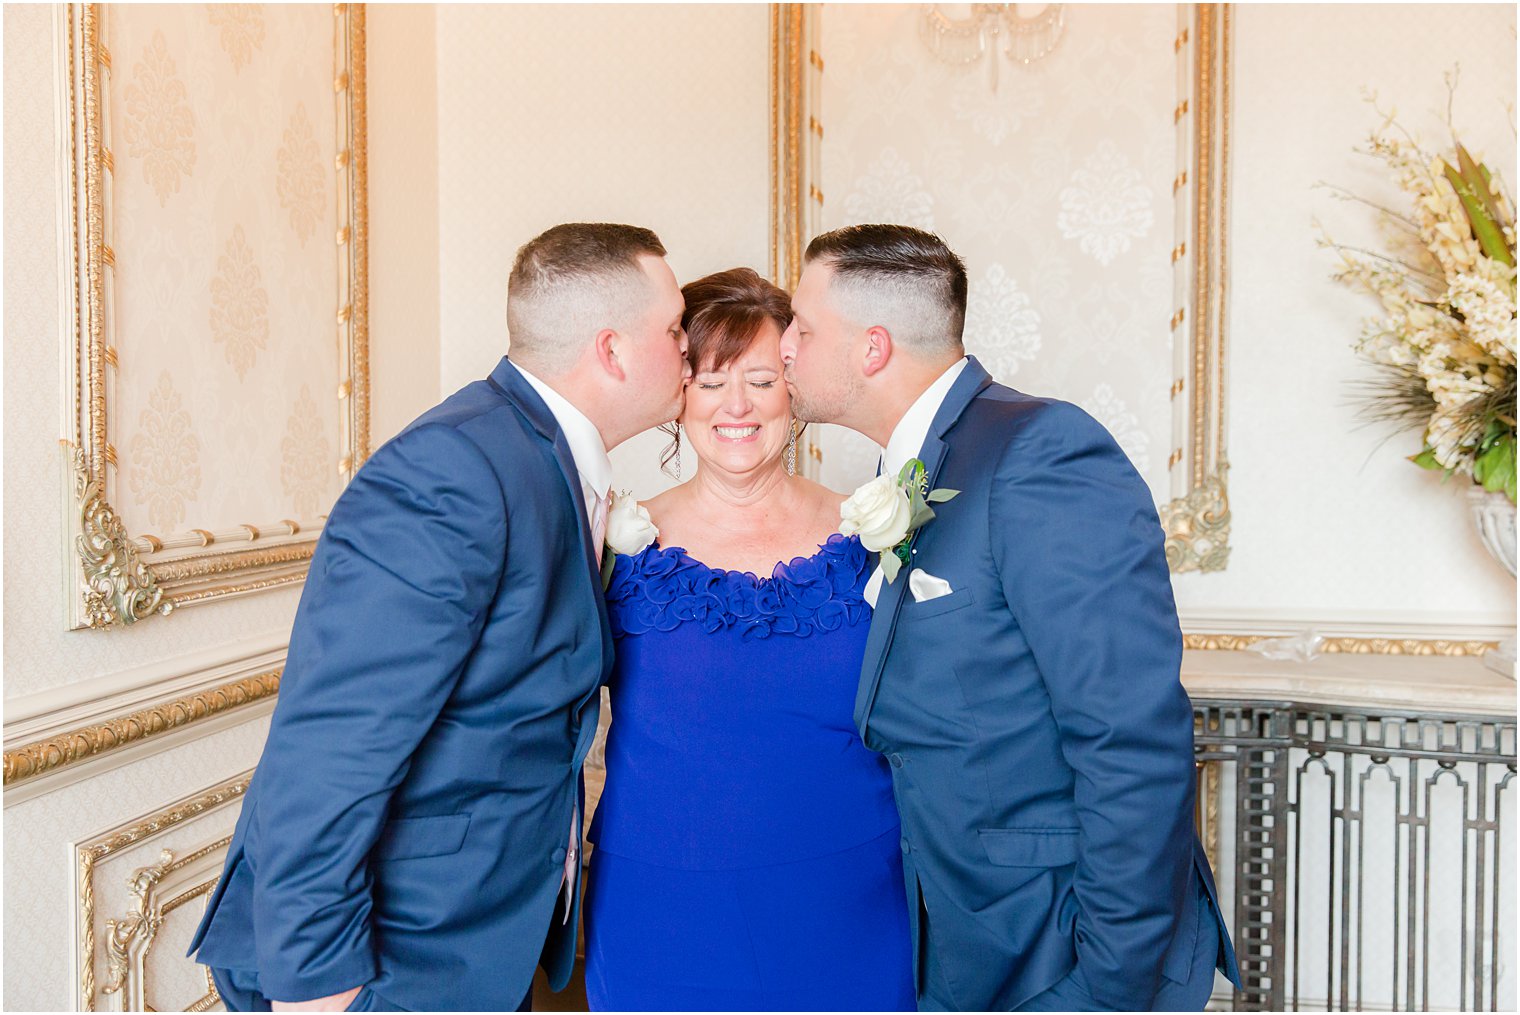 brothers kiss mom's cheek during photos at Brigalia's